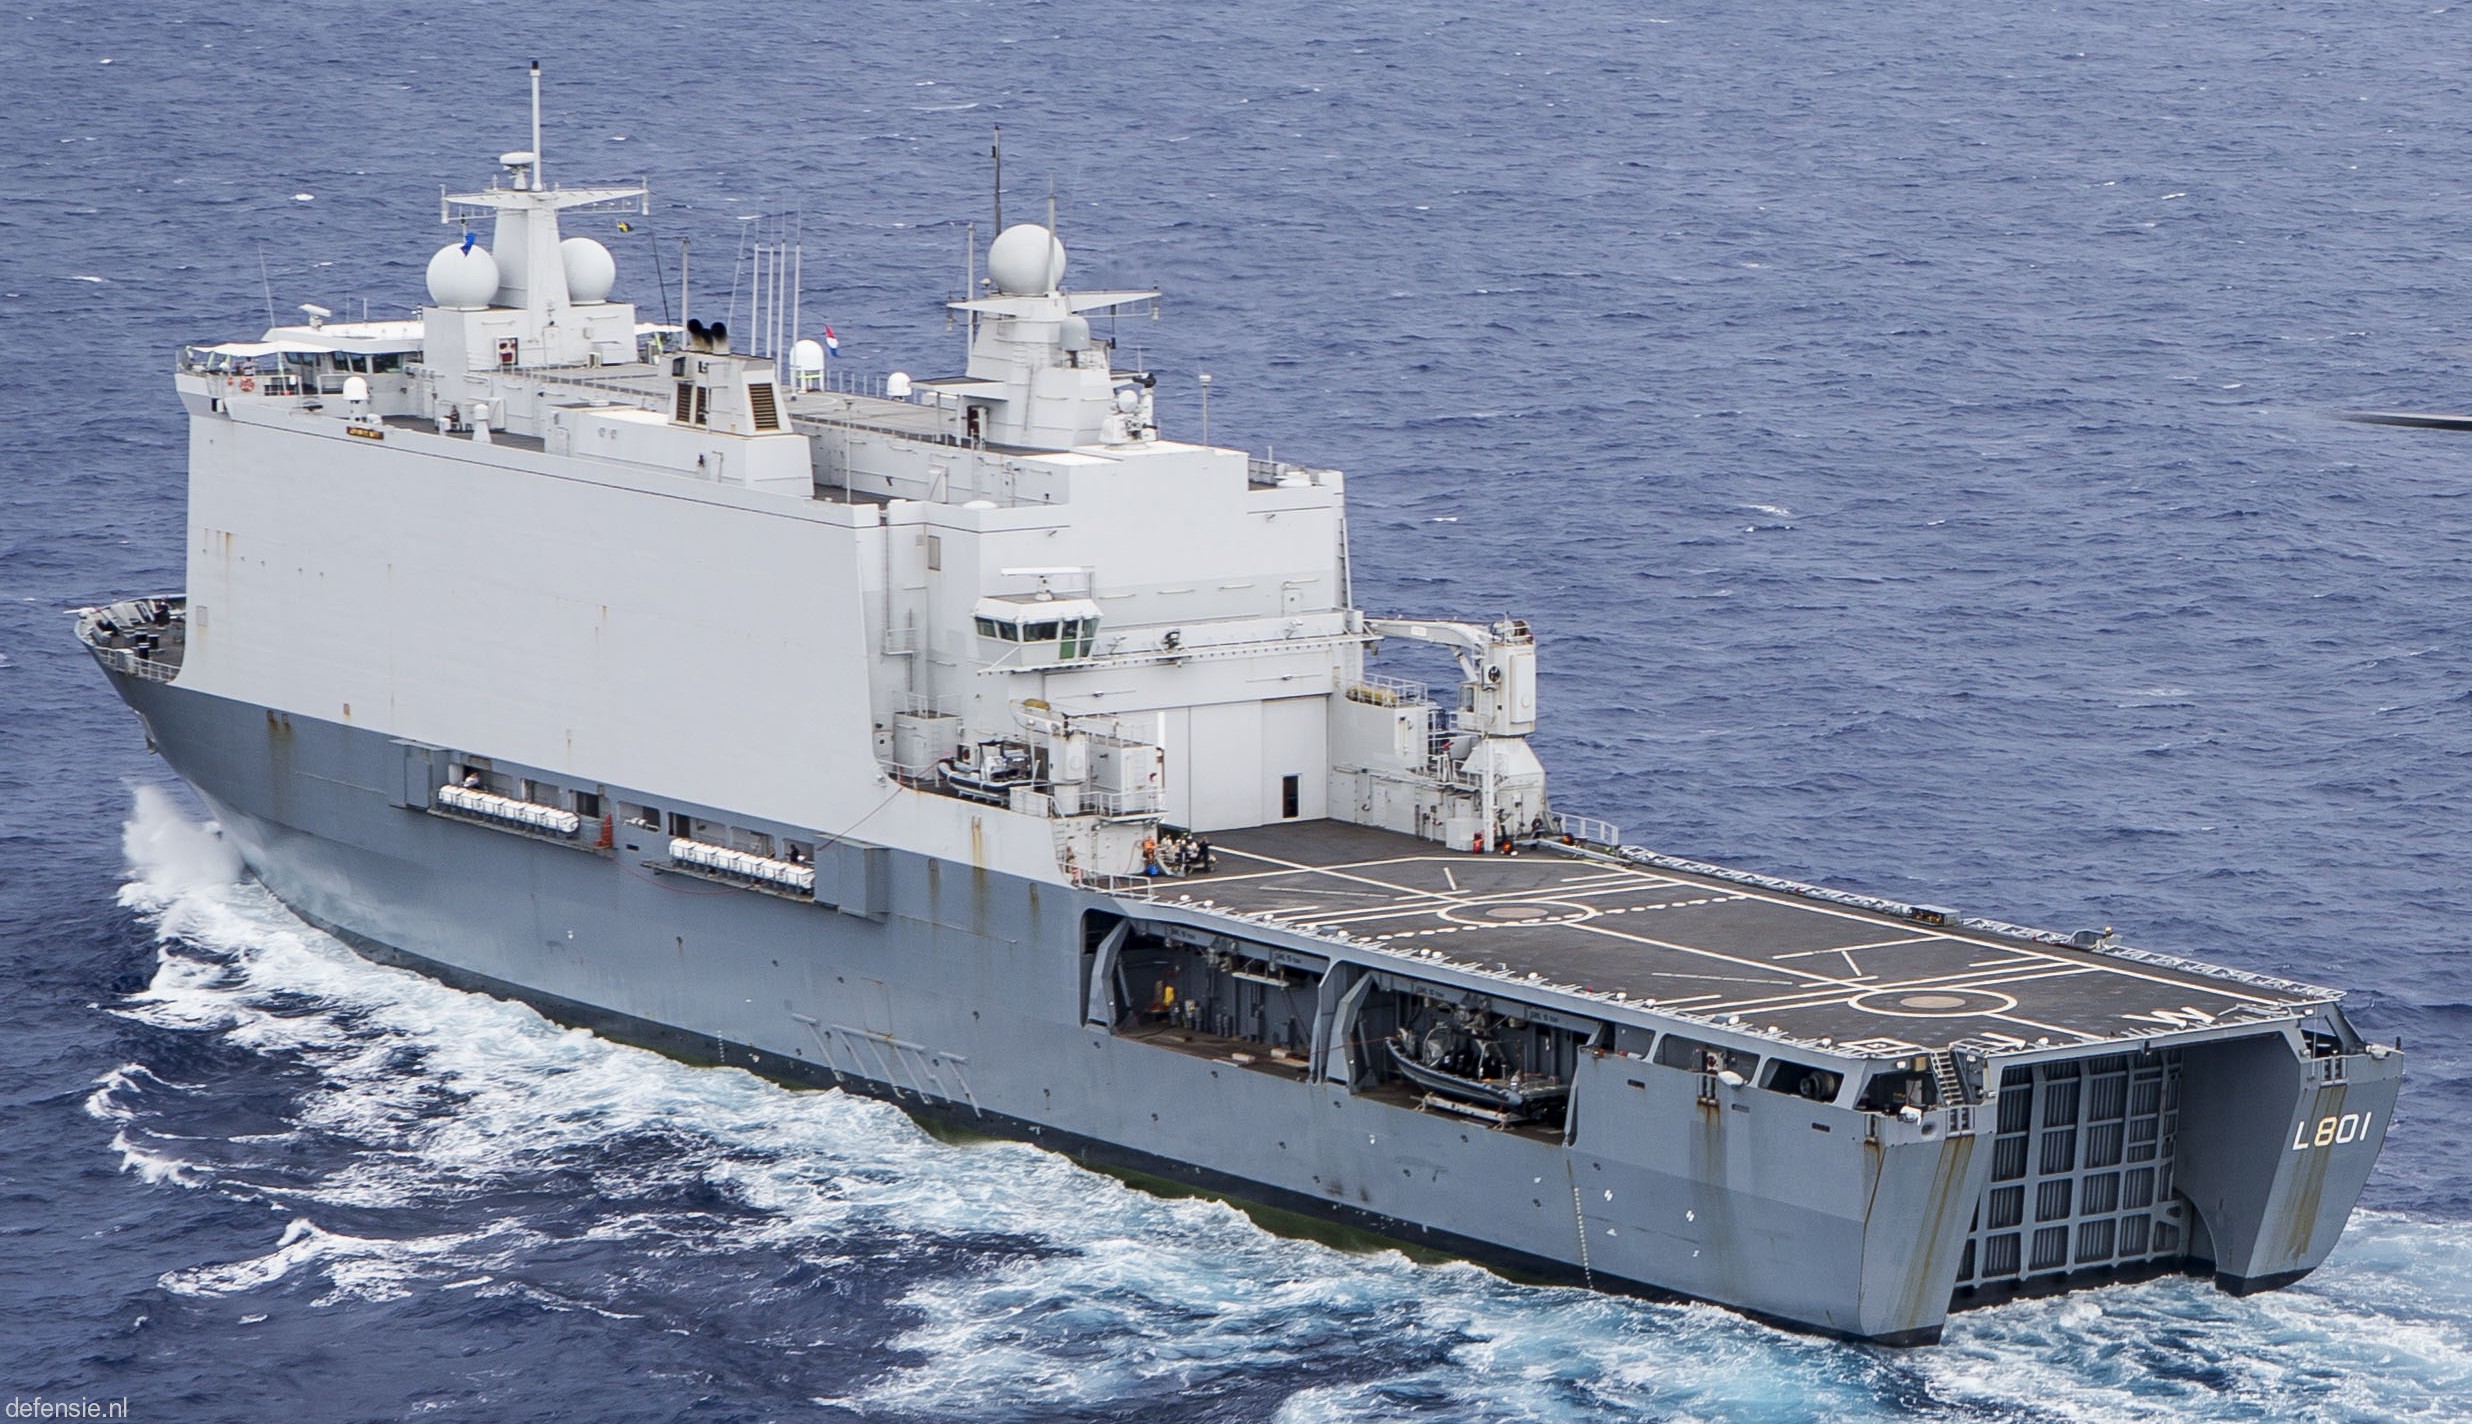 l-801 hnlms johan de witt amphibious ship landing platform dock lpd royal netherlands navy 05 koninklijke marine